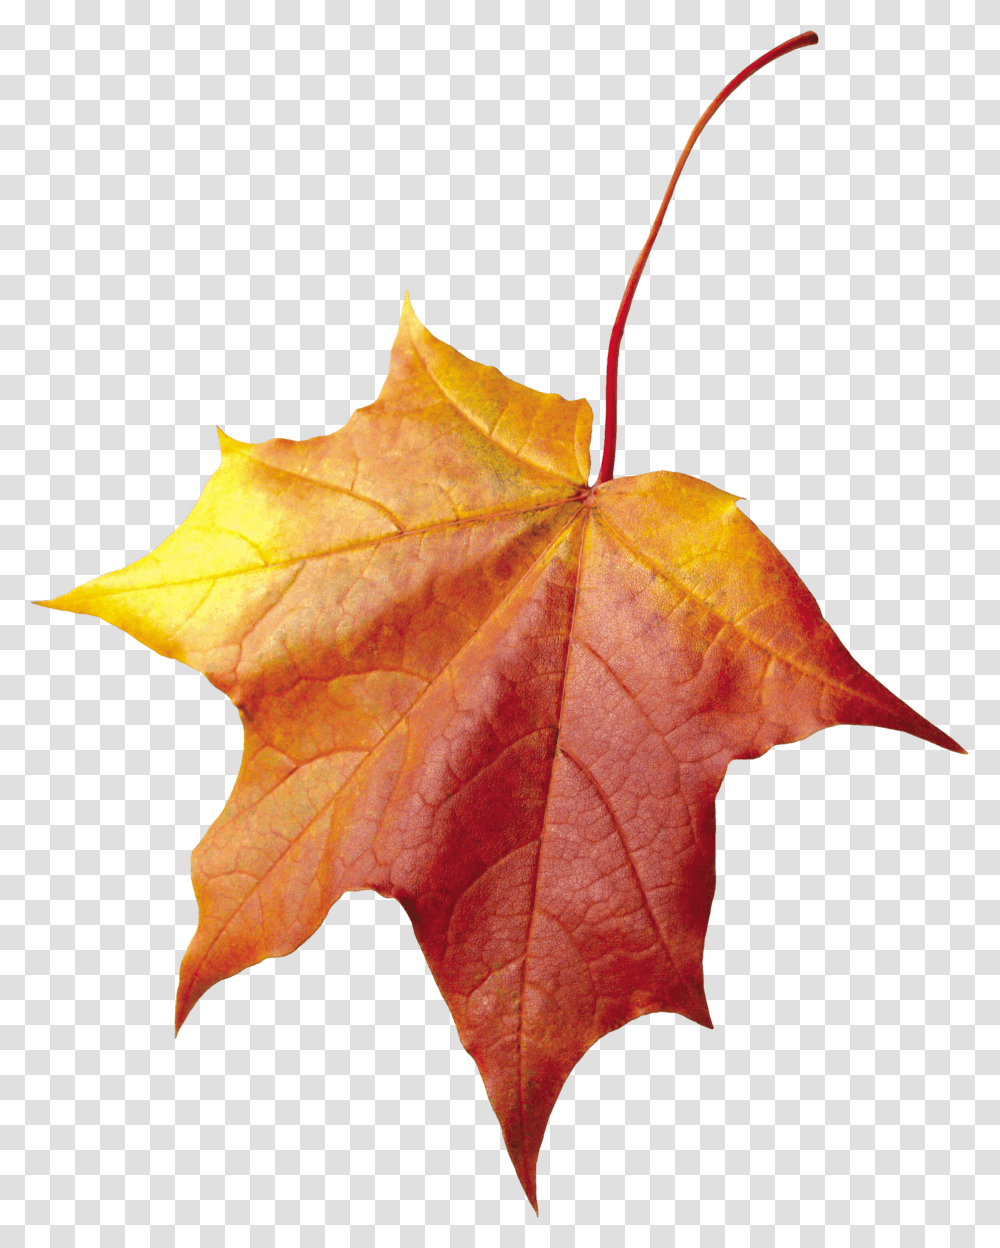 Download Autumn Leaf Hq Image Autumn Leaves Pink, Plant, Tree, Maple, Maple Leaf Transparent Png